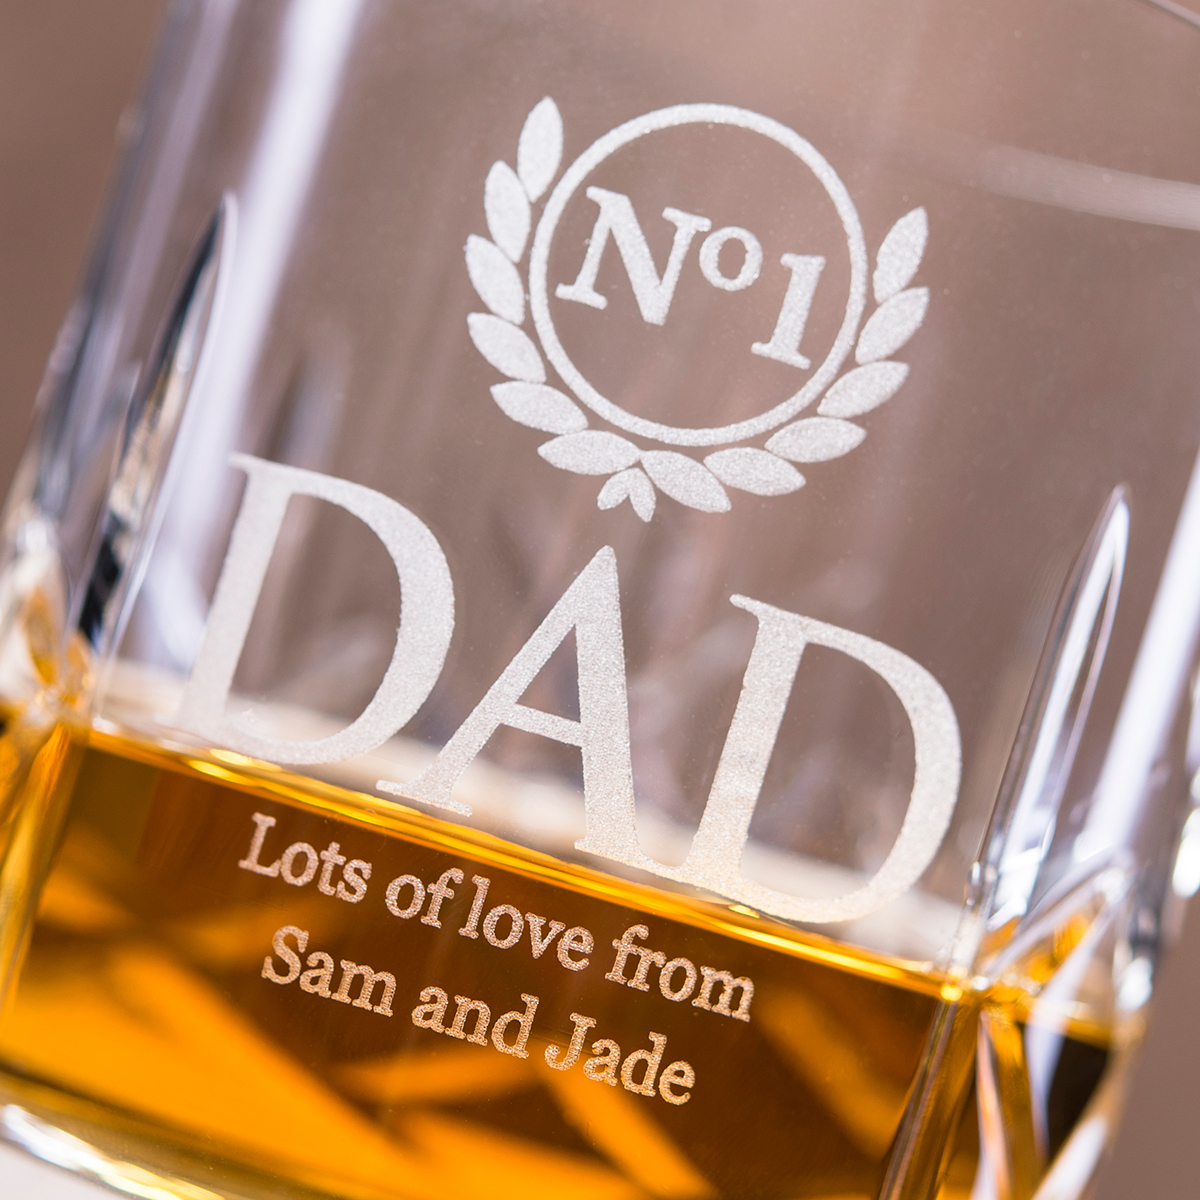 Personalised Cut Crystal Whisky Tumbler - No. 1 Dad